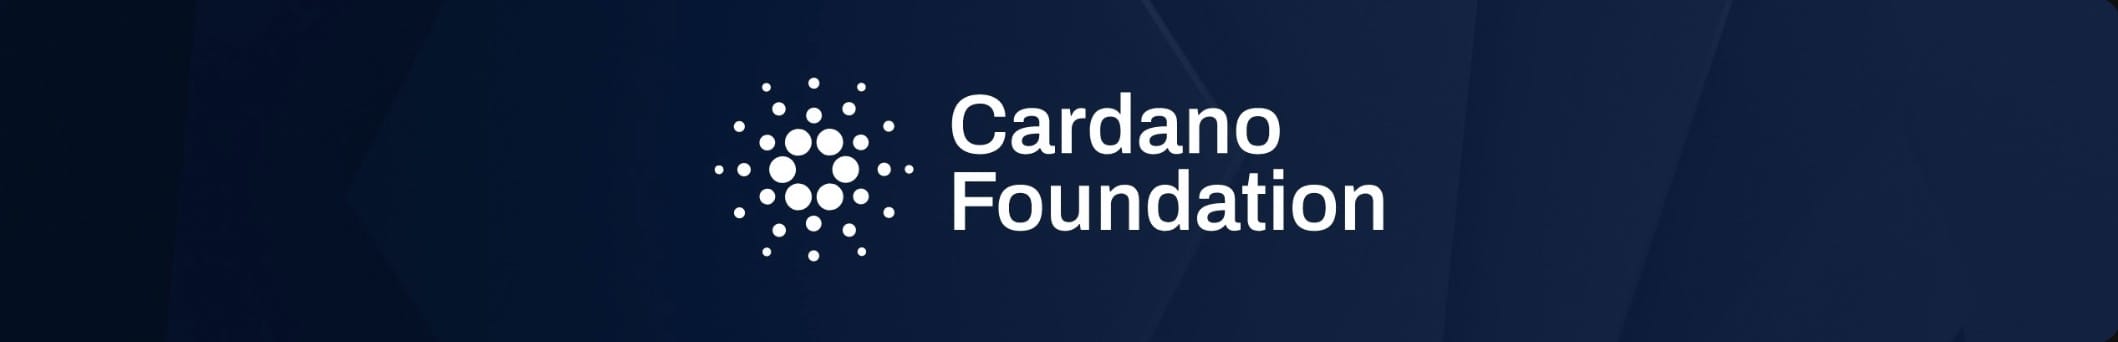 Cardano Foundation Banner